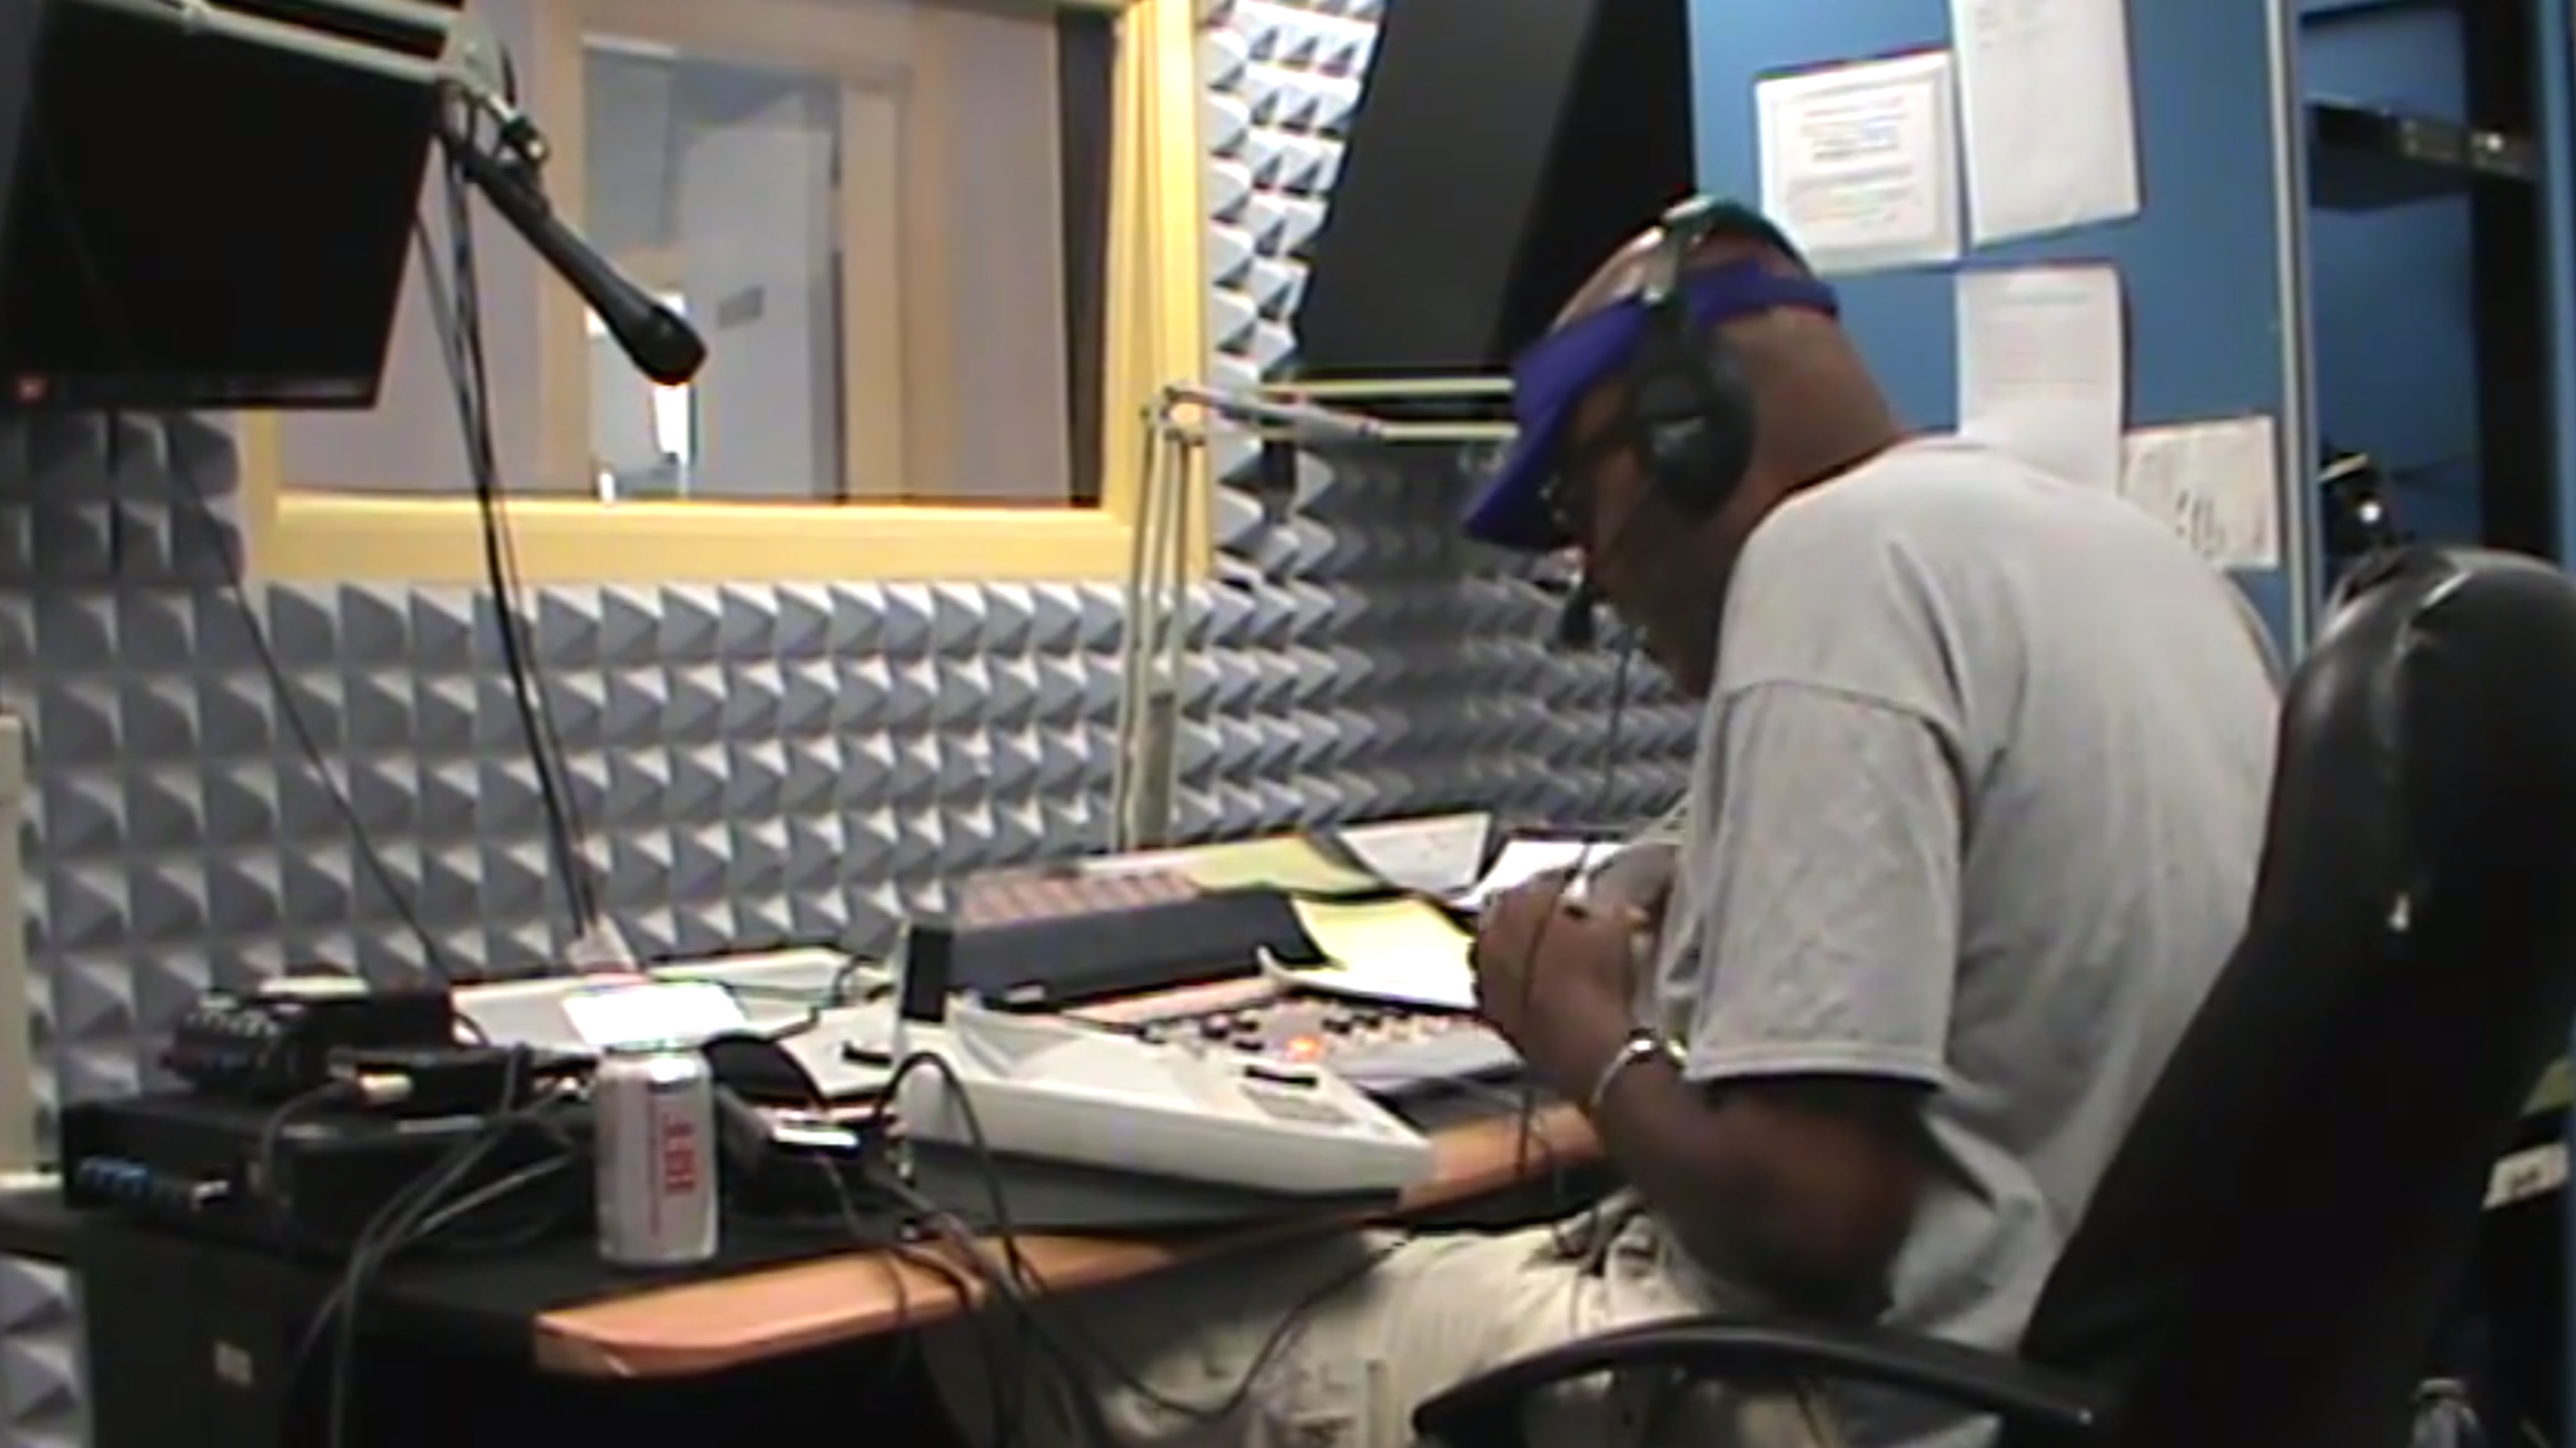 The ‘Coach Jay Hopson Radio Show’ on WPRL 91.7 FM